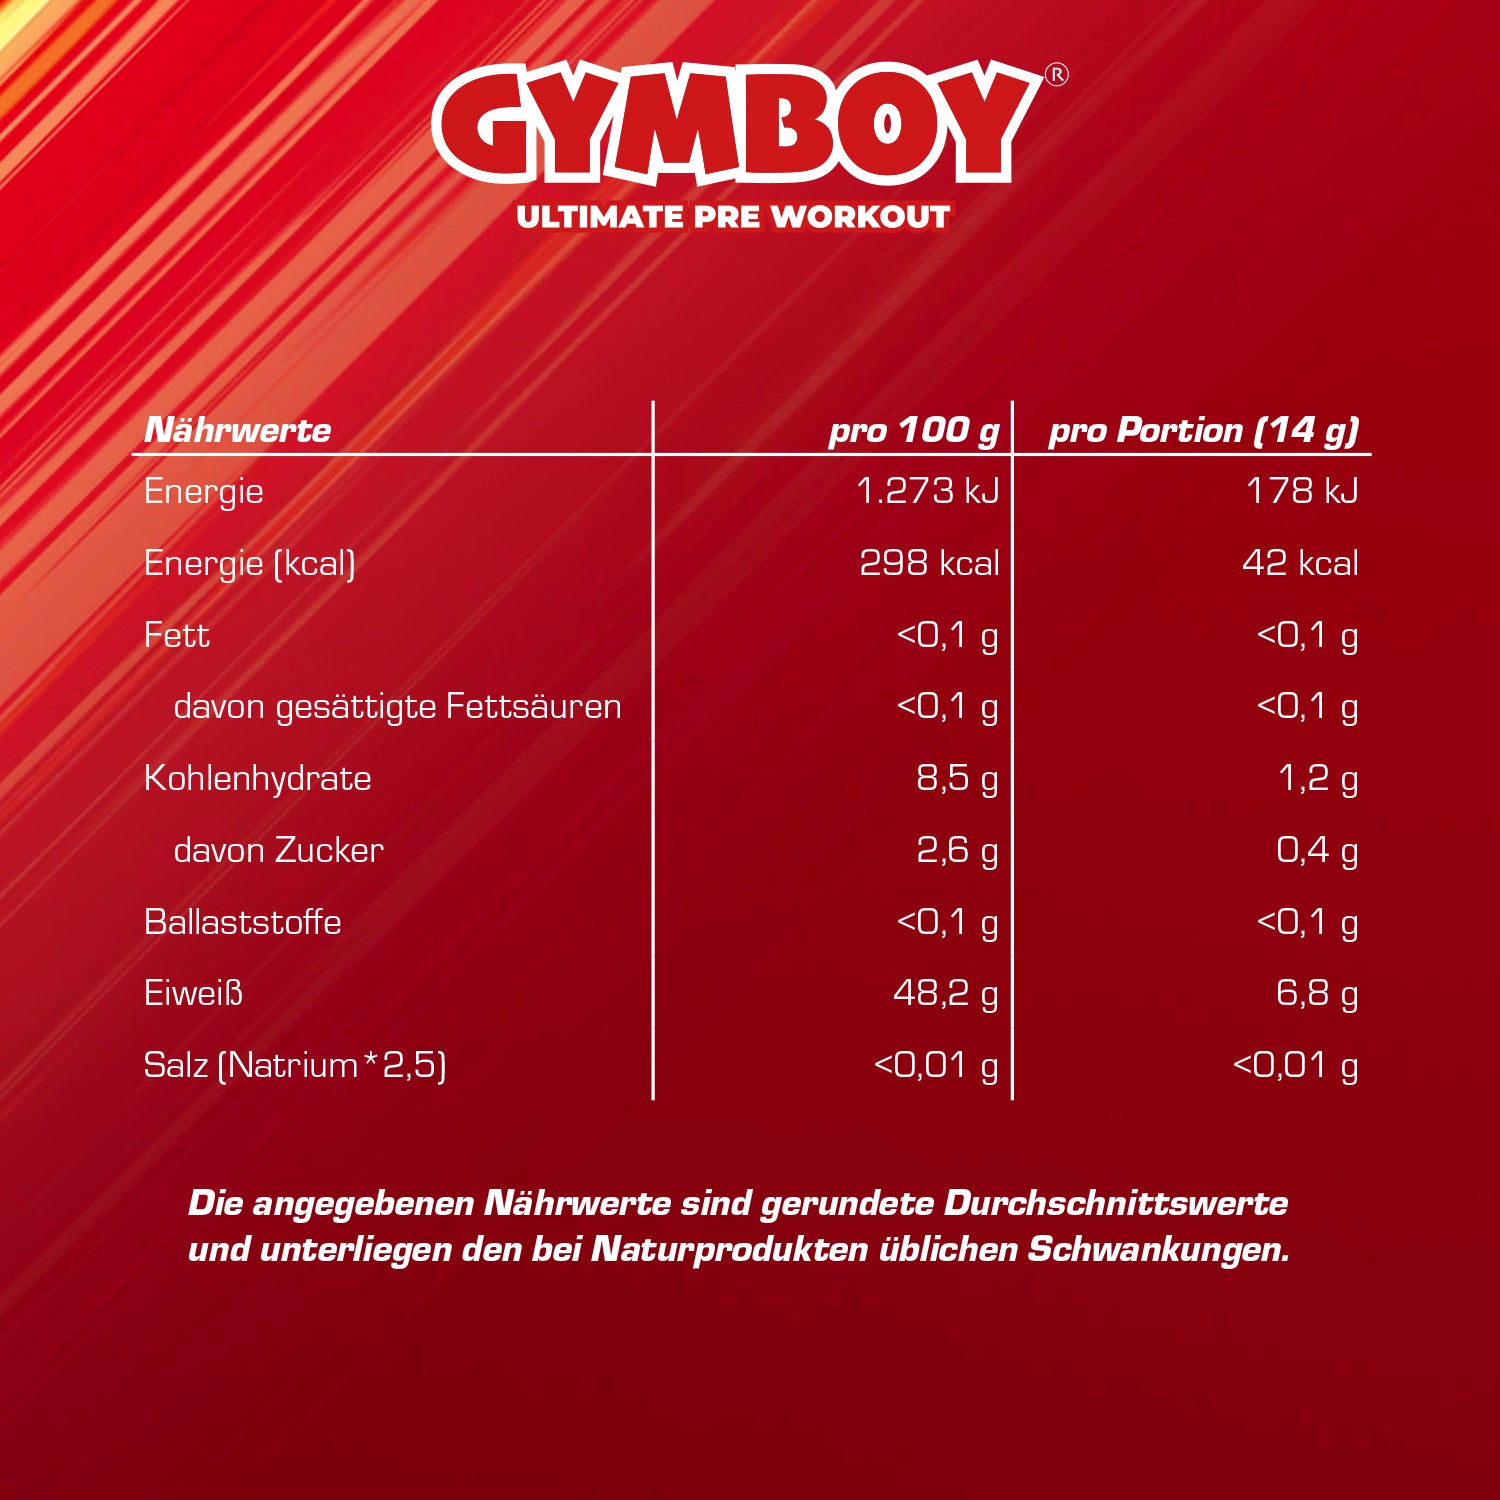 GYMBOY® – Pre Workout Power Peach Edition 392 g